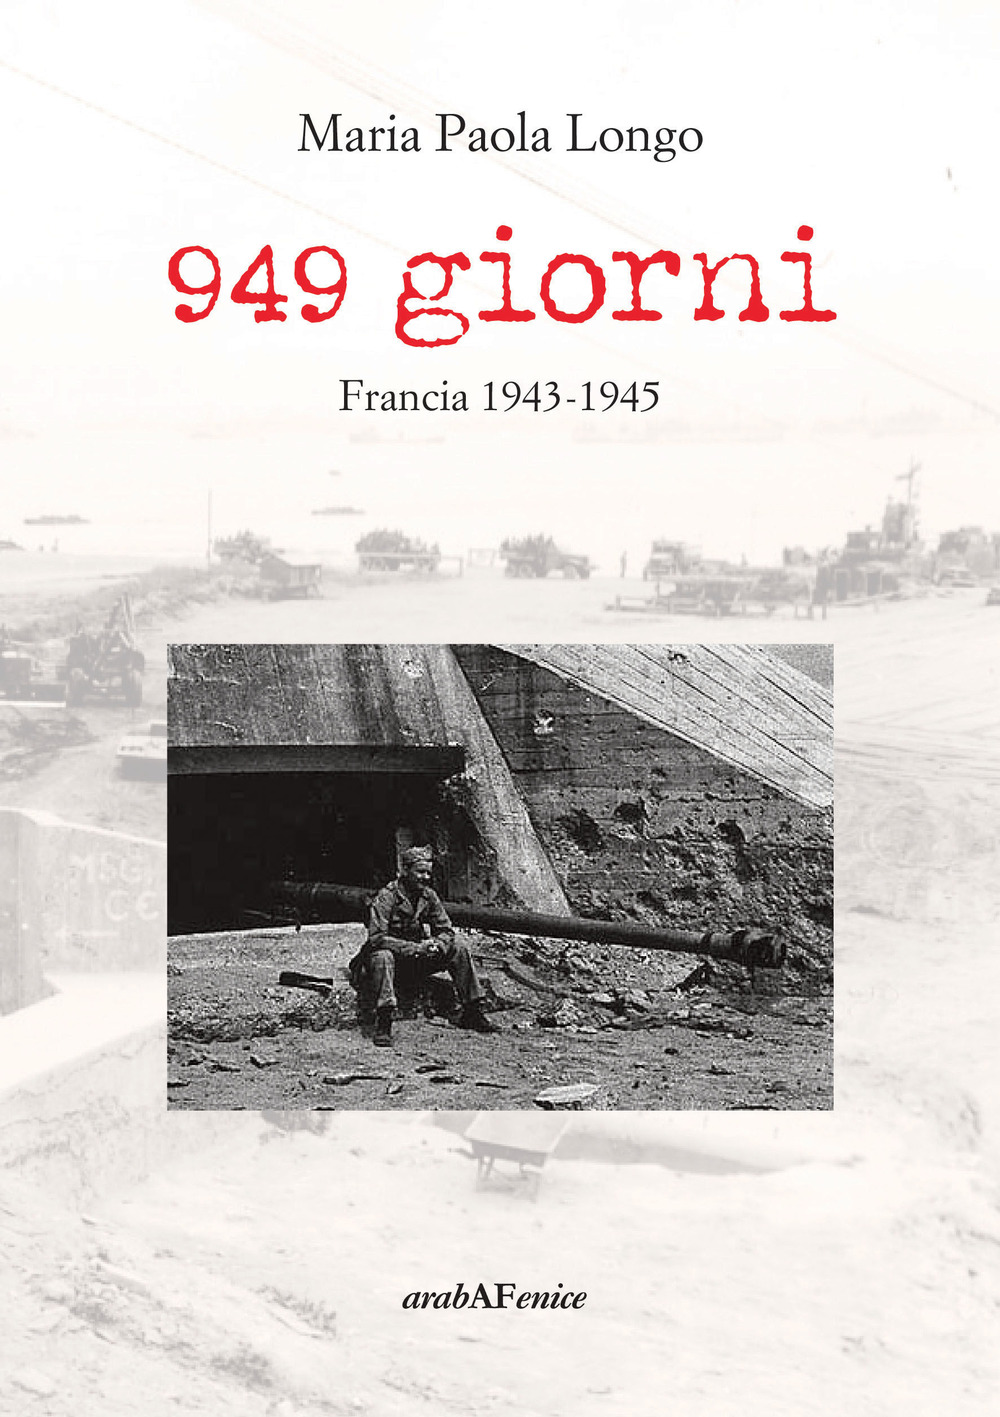 949 giorni. Francia 1943-1945